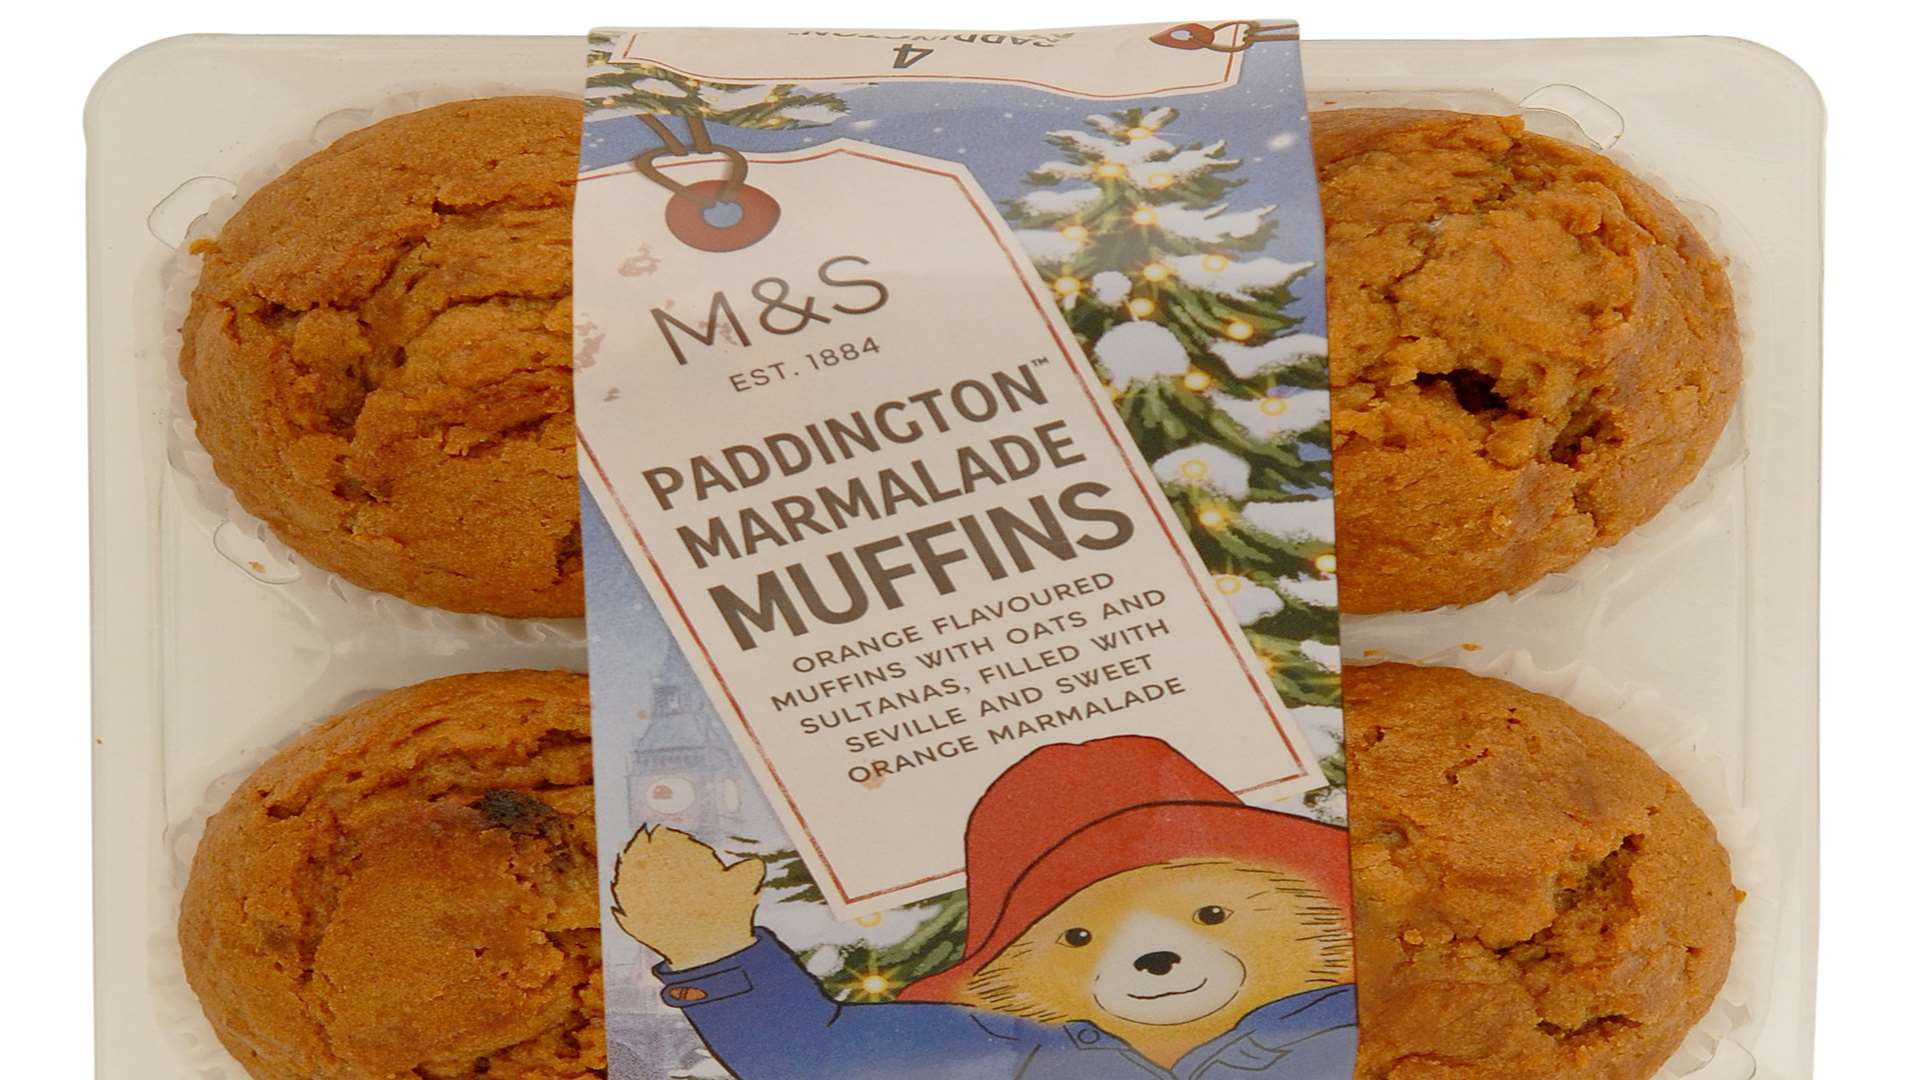 Paddington Marmalade Muffins at M&S